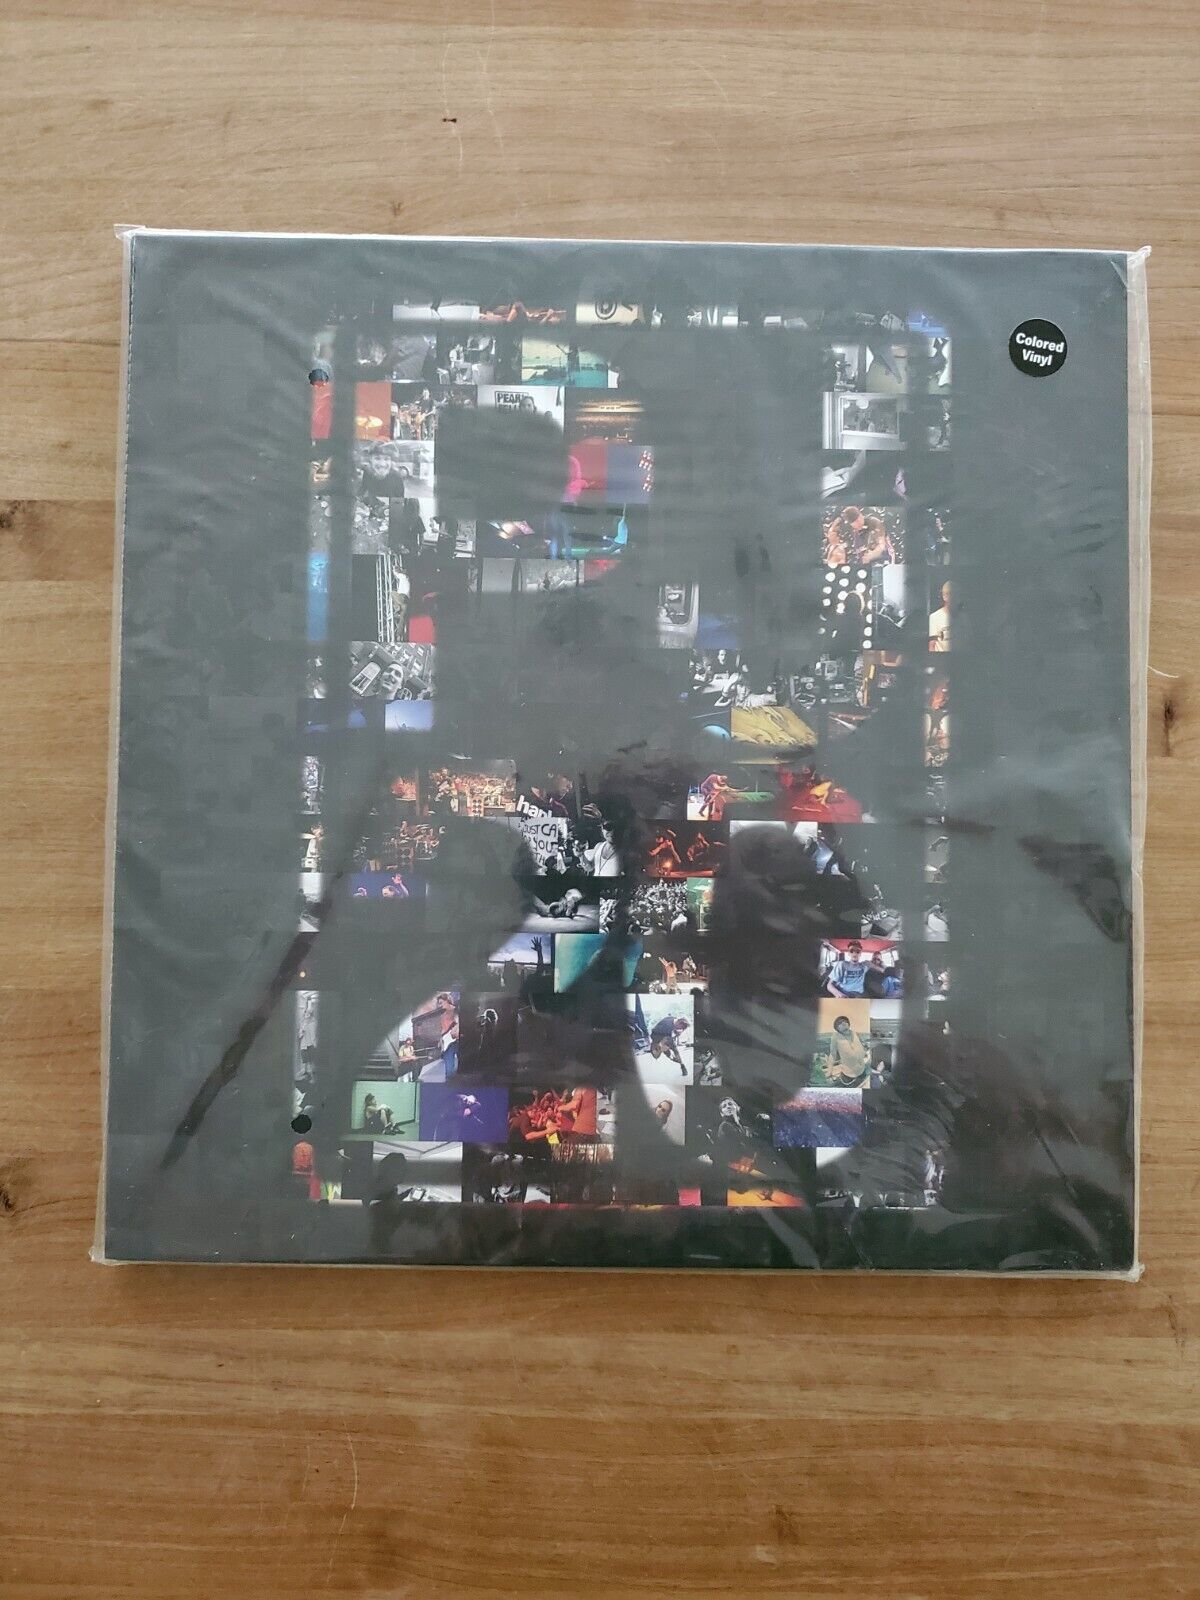 Pearl Jam PJ20 12" vinyl record Limited SEALED colored SUPER RARE 2011